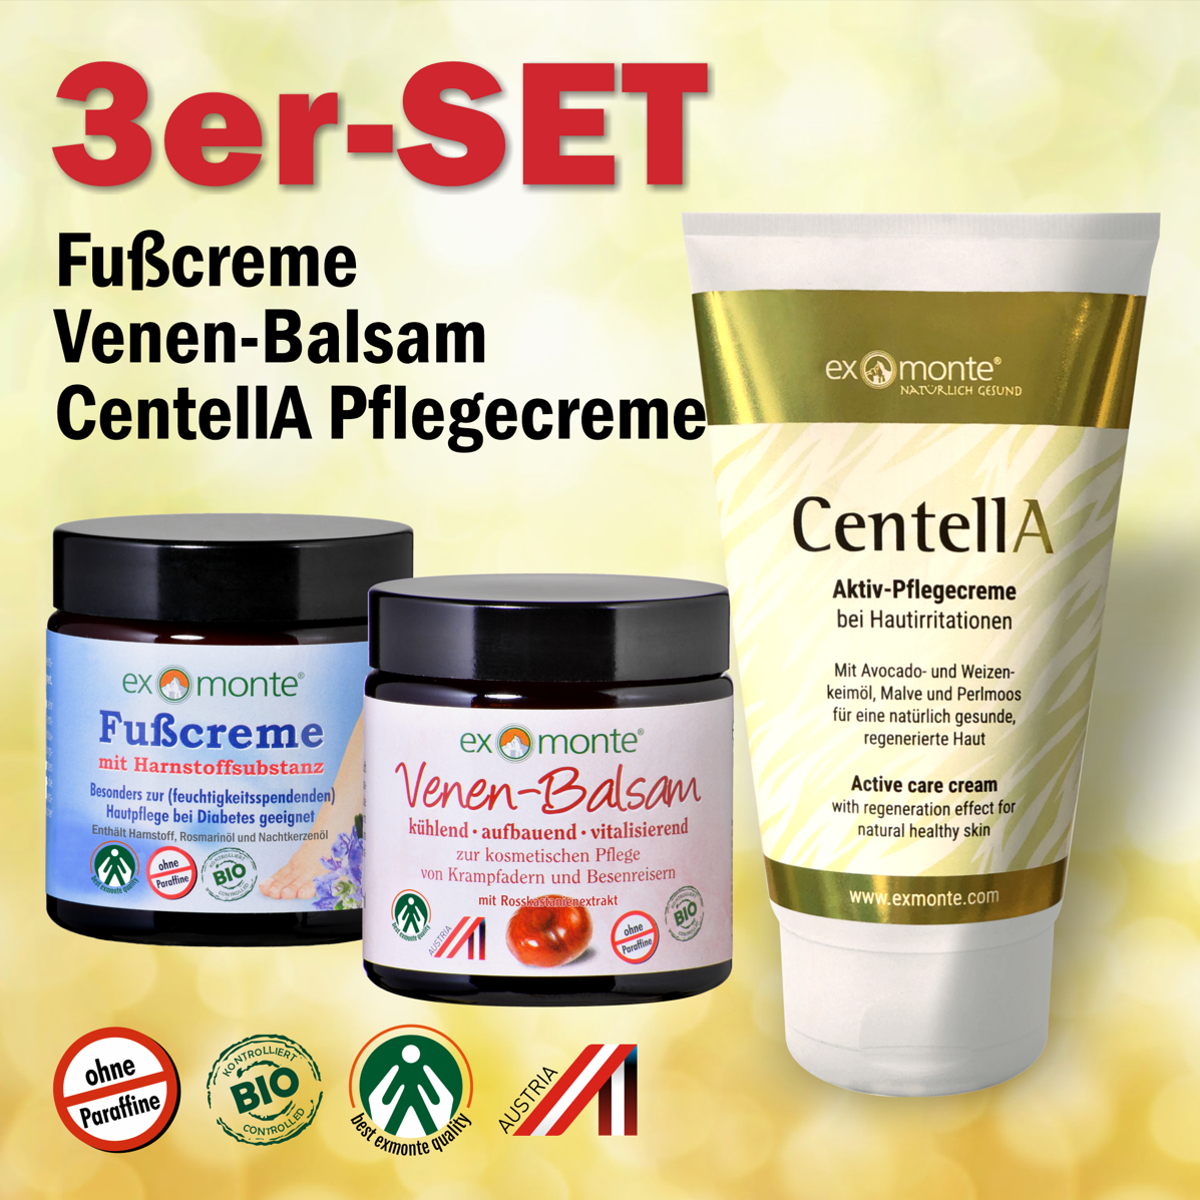 3 Piece Set Veins-Balm, Foot Cream and CentellA Active care